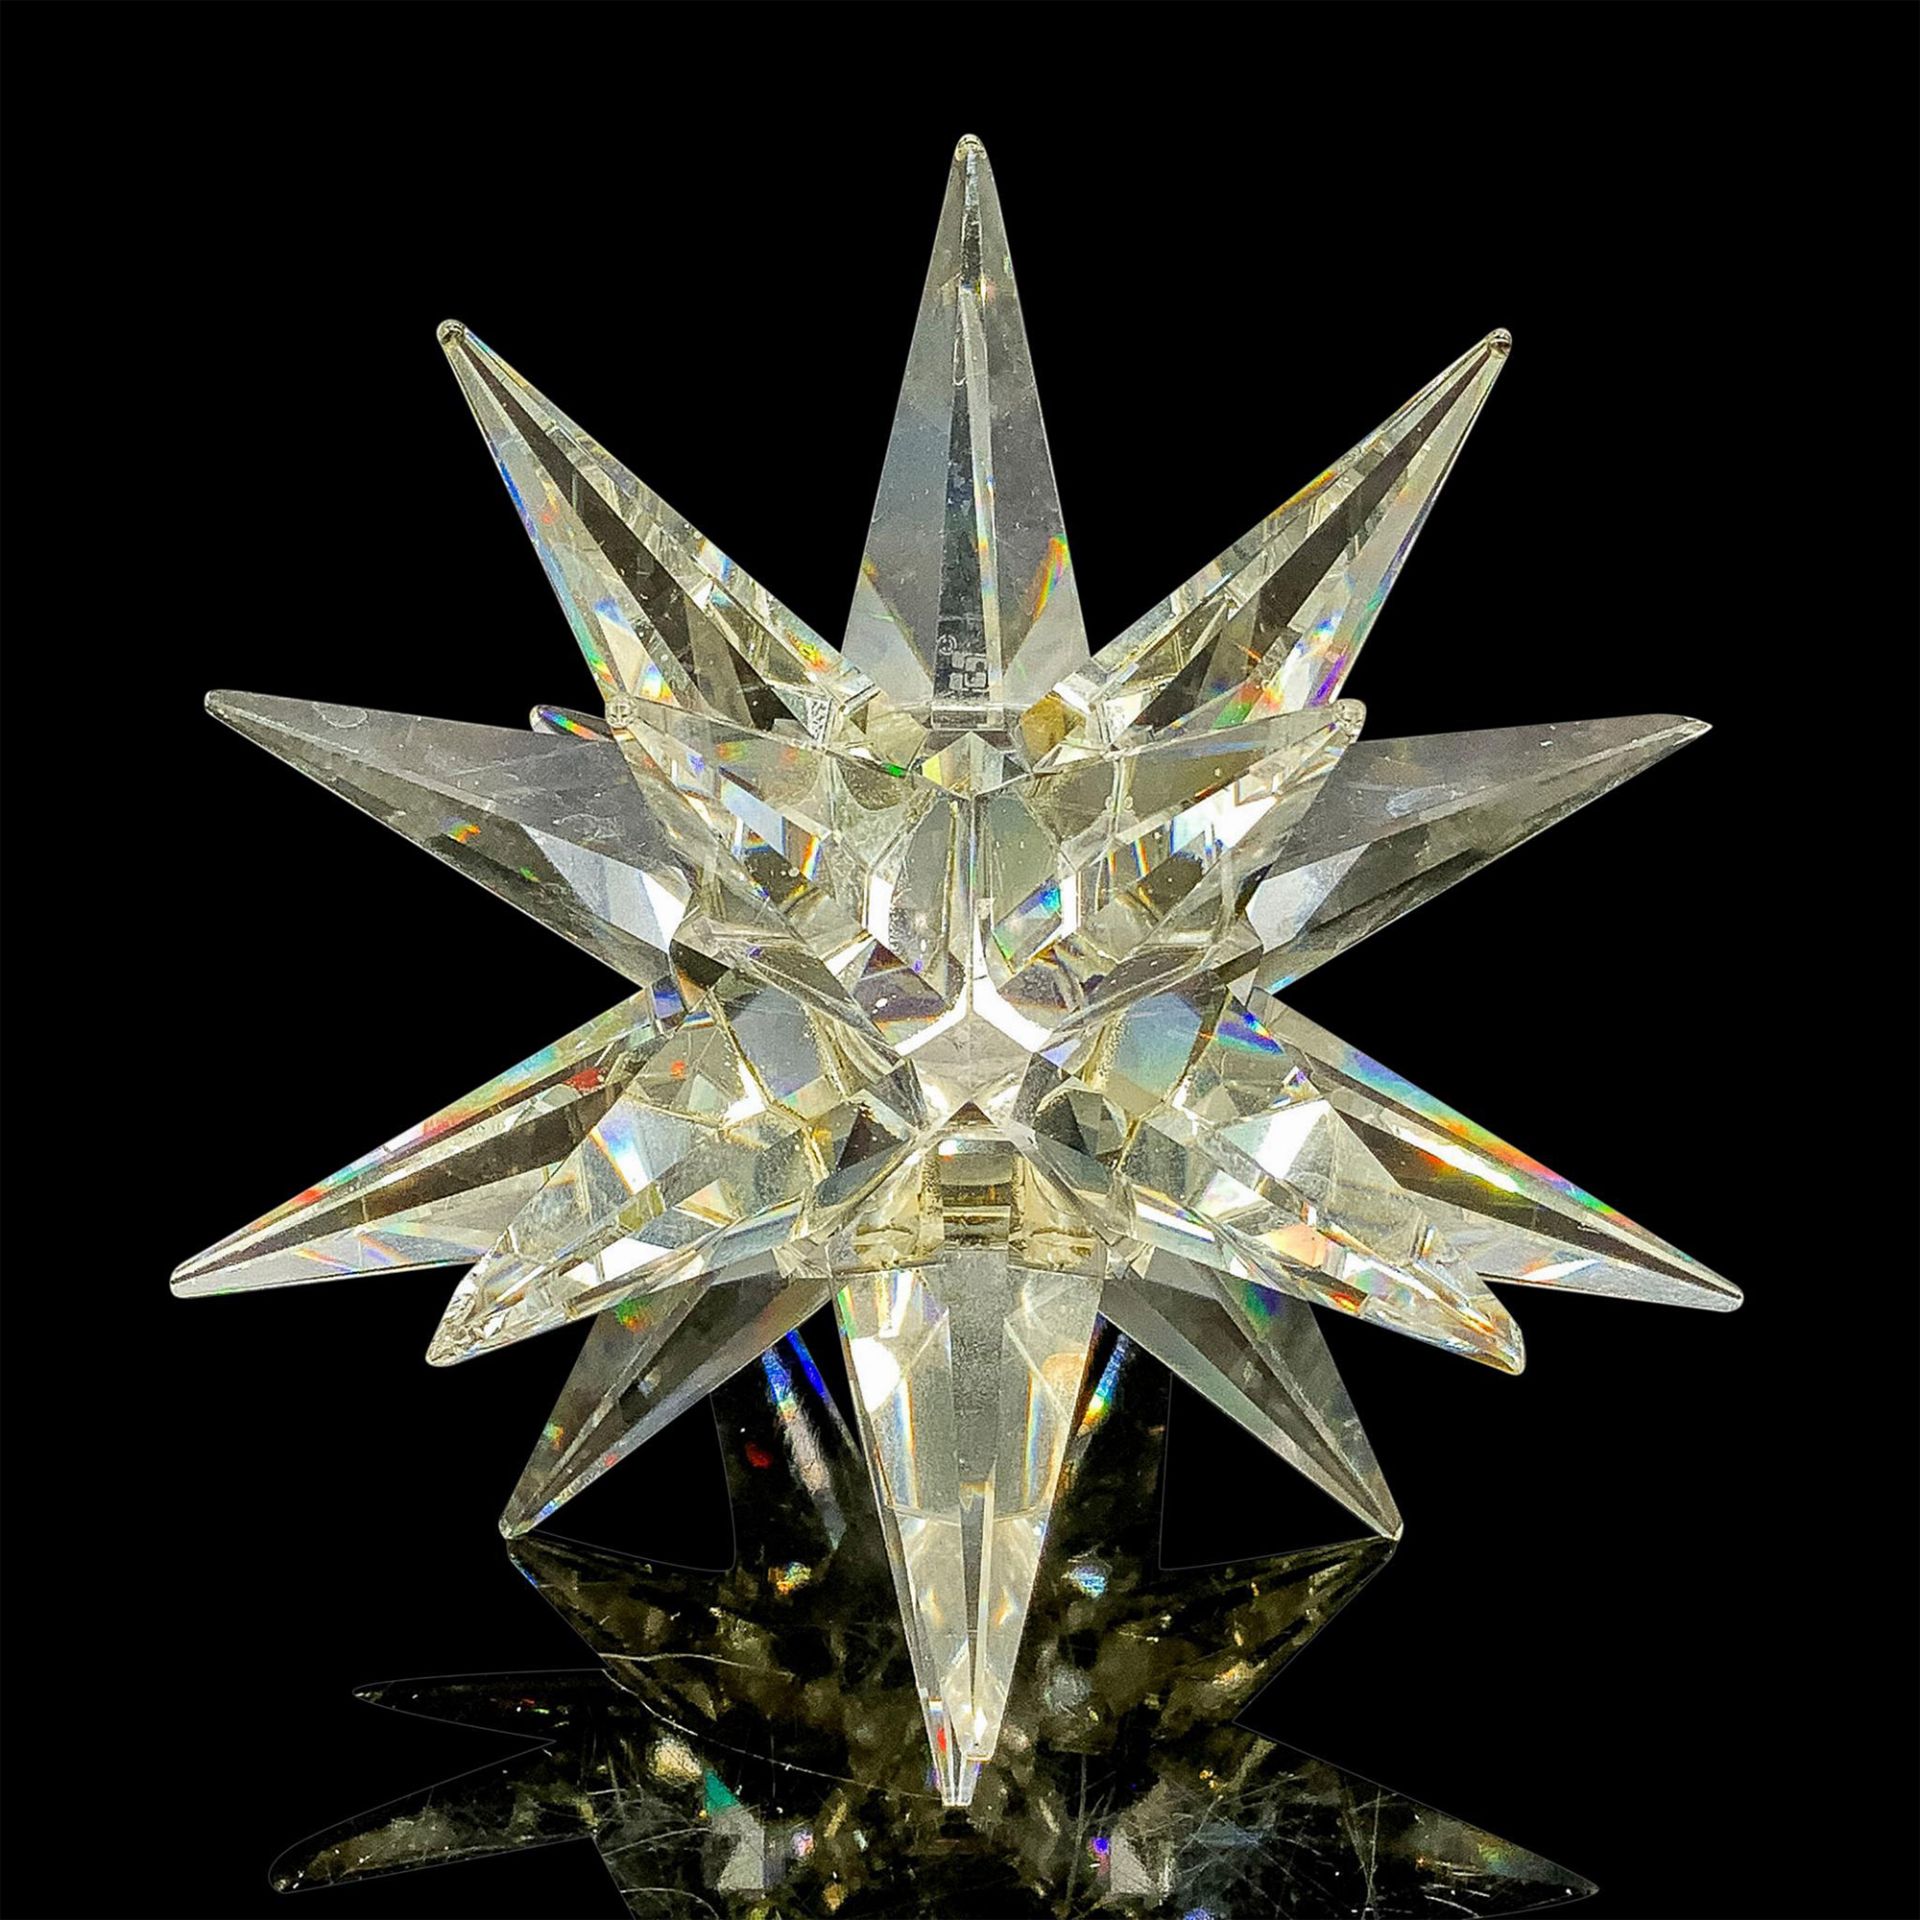 Swarovski Silver Crystal Star Candle Holder